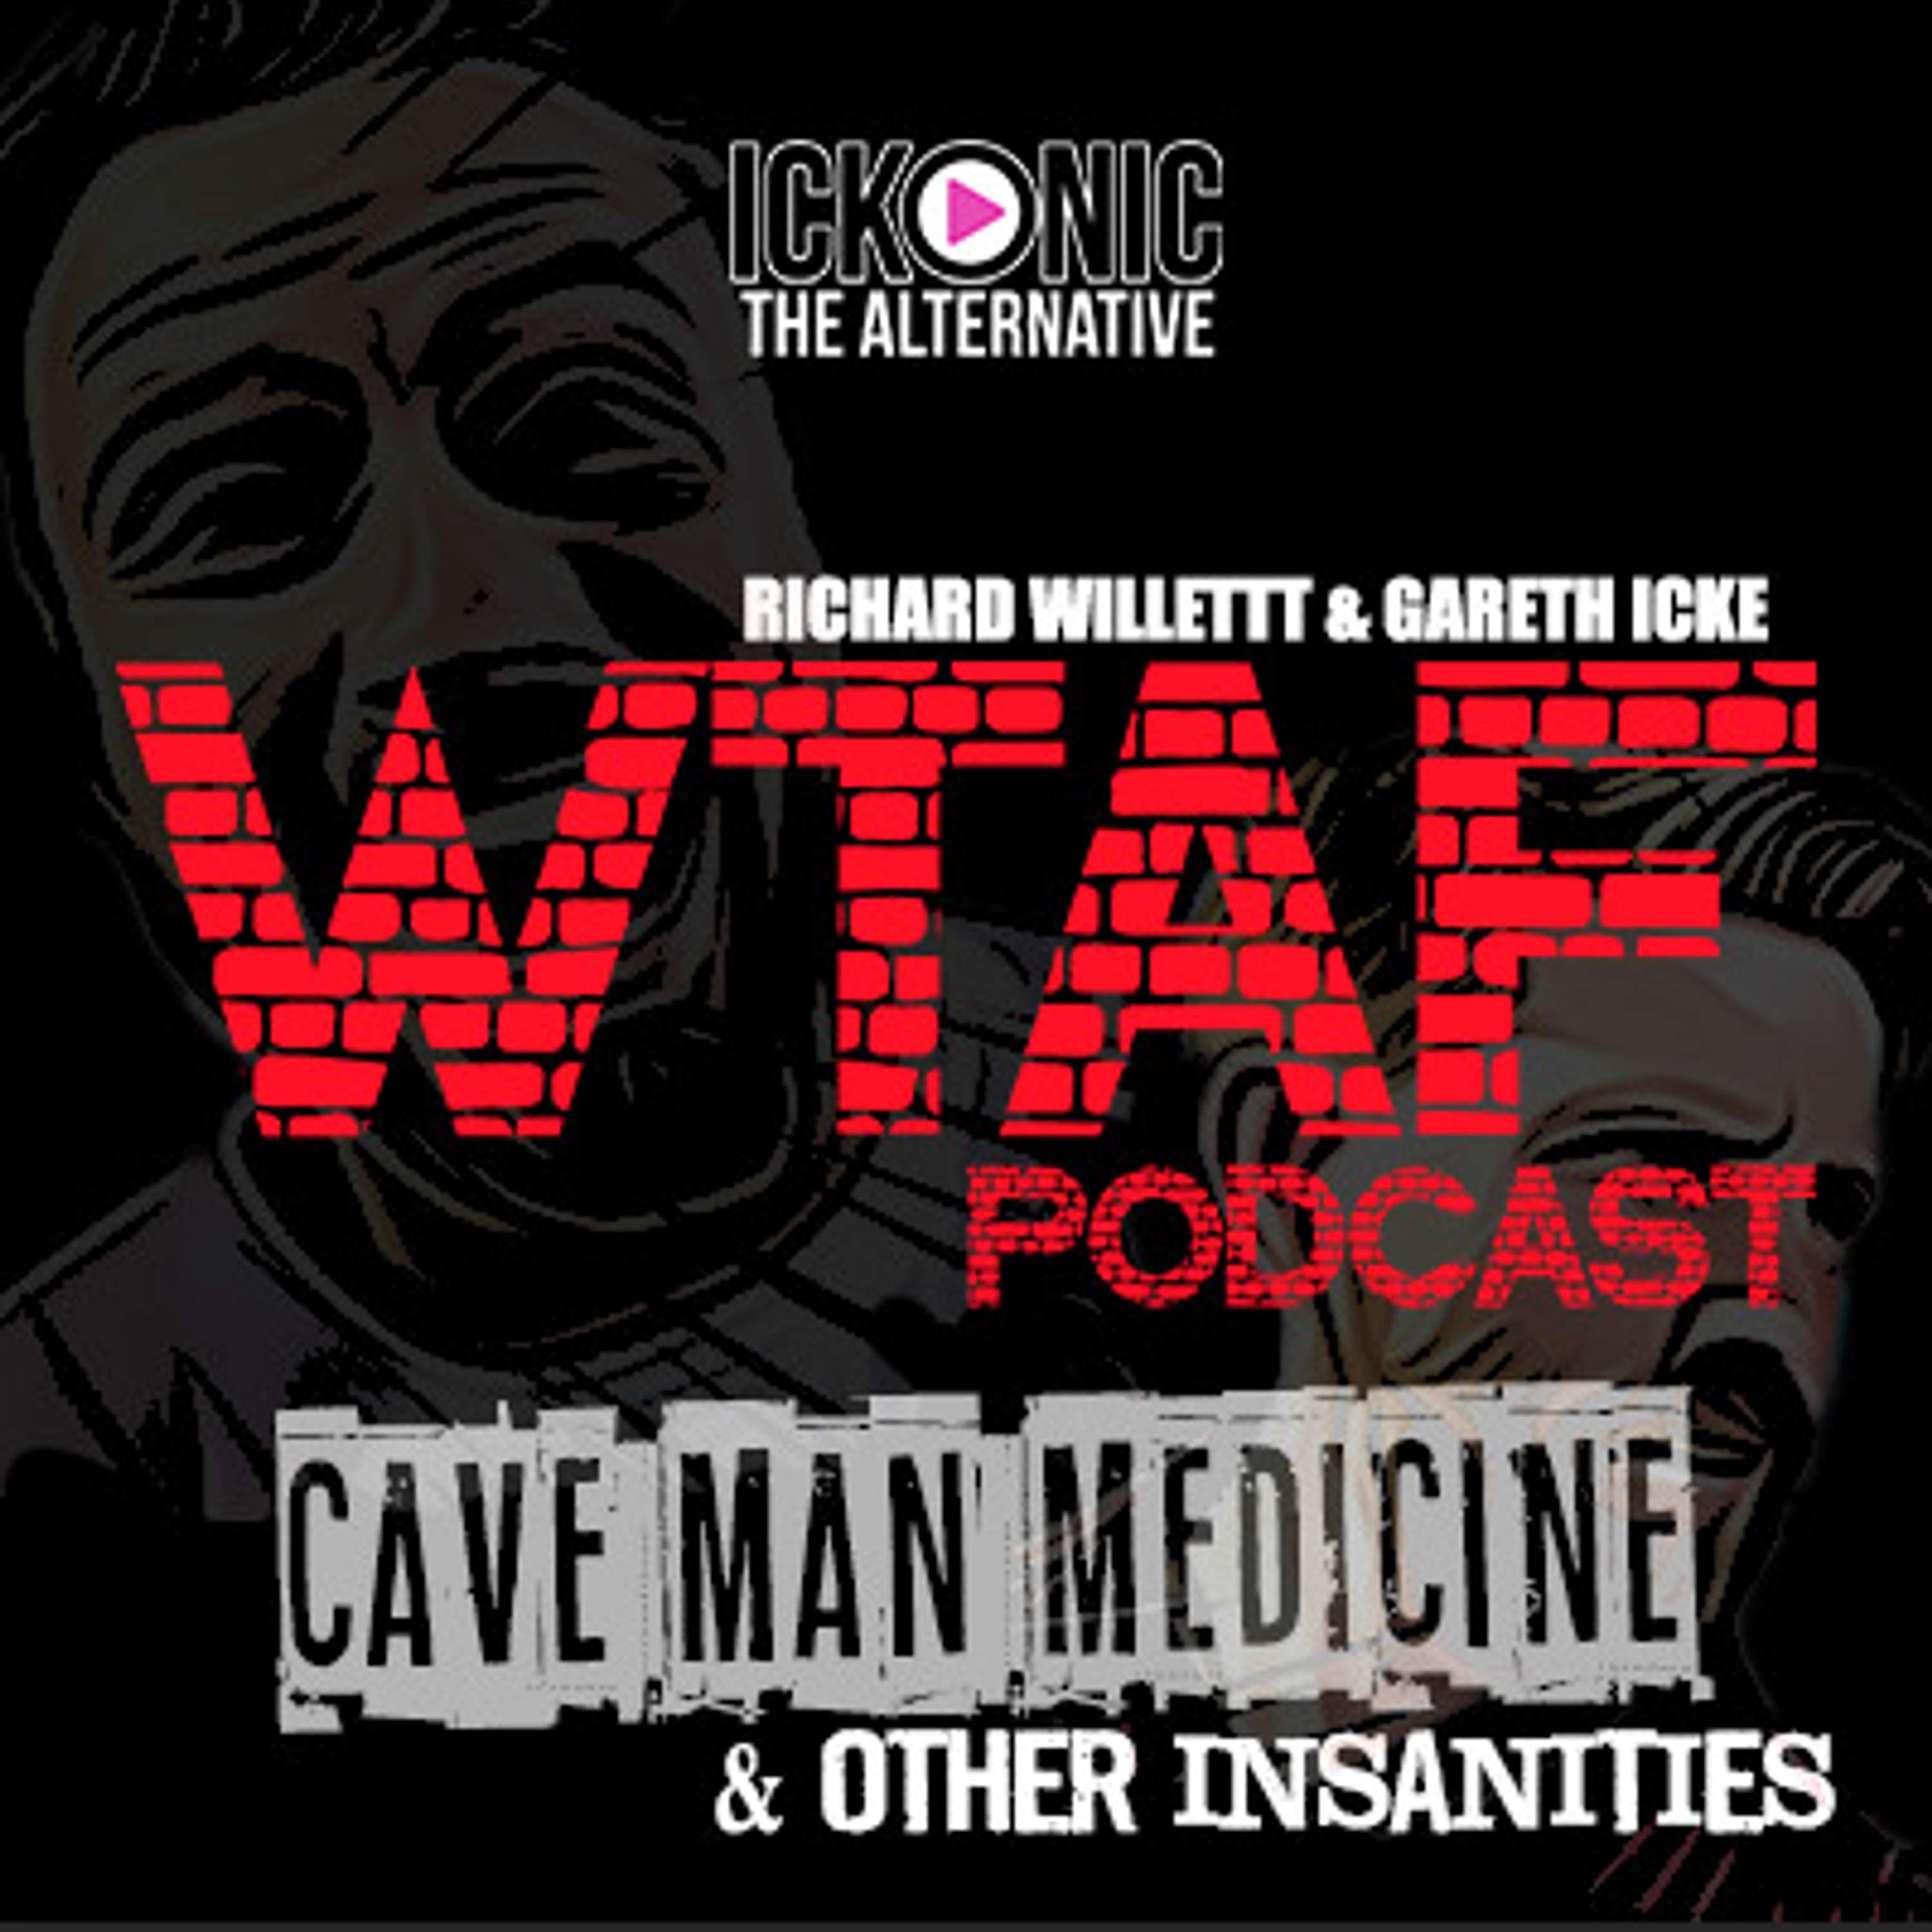 WTAF'in Cave Man Medicine